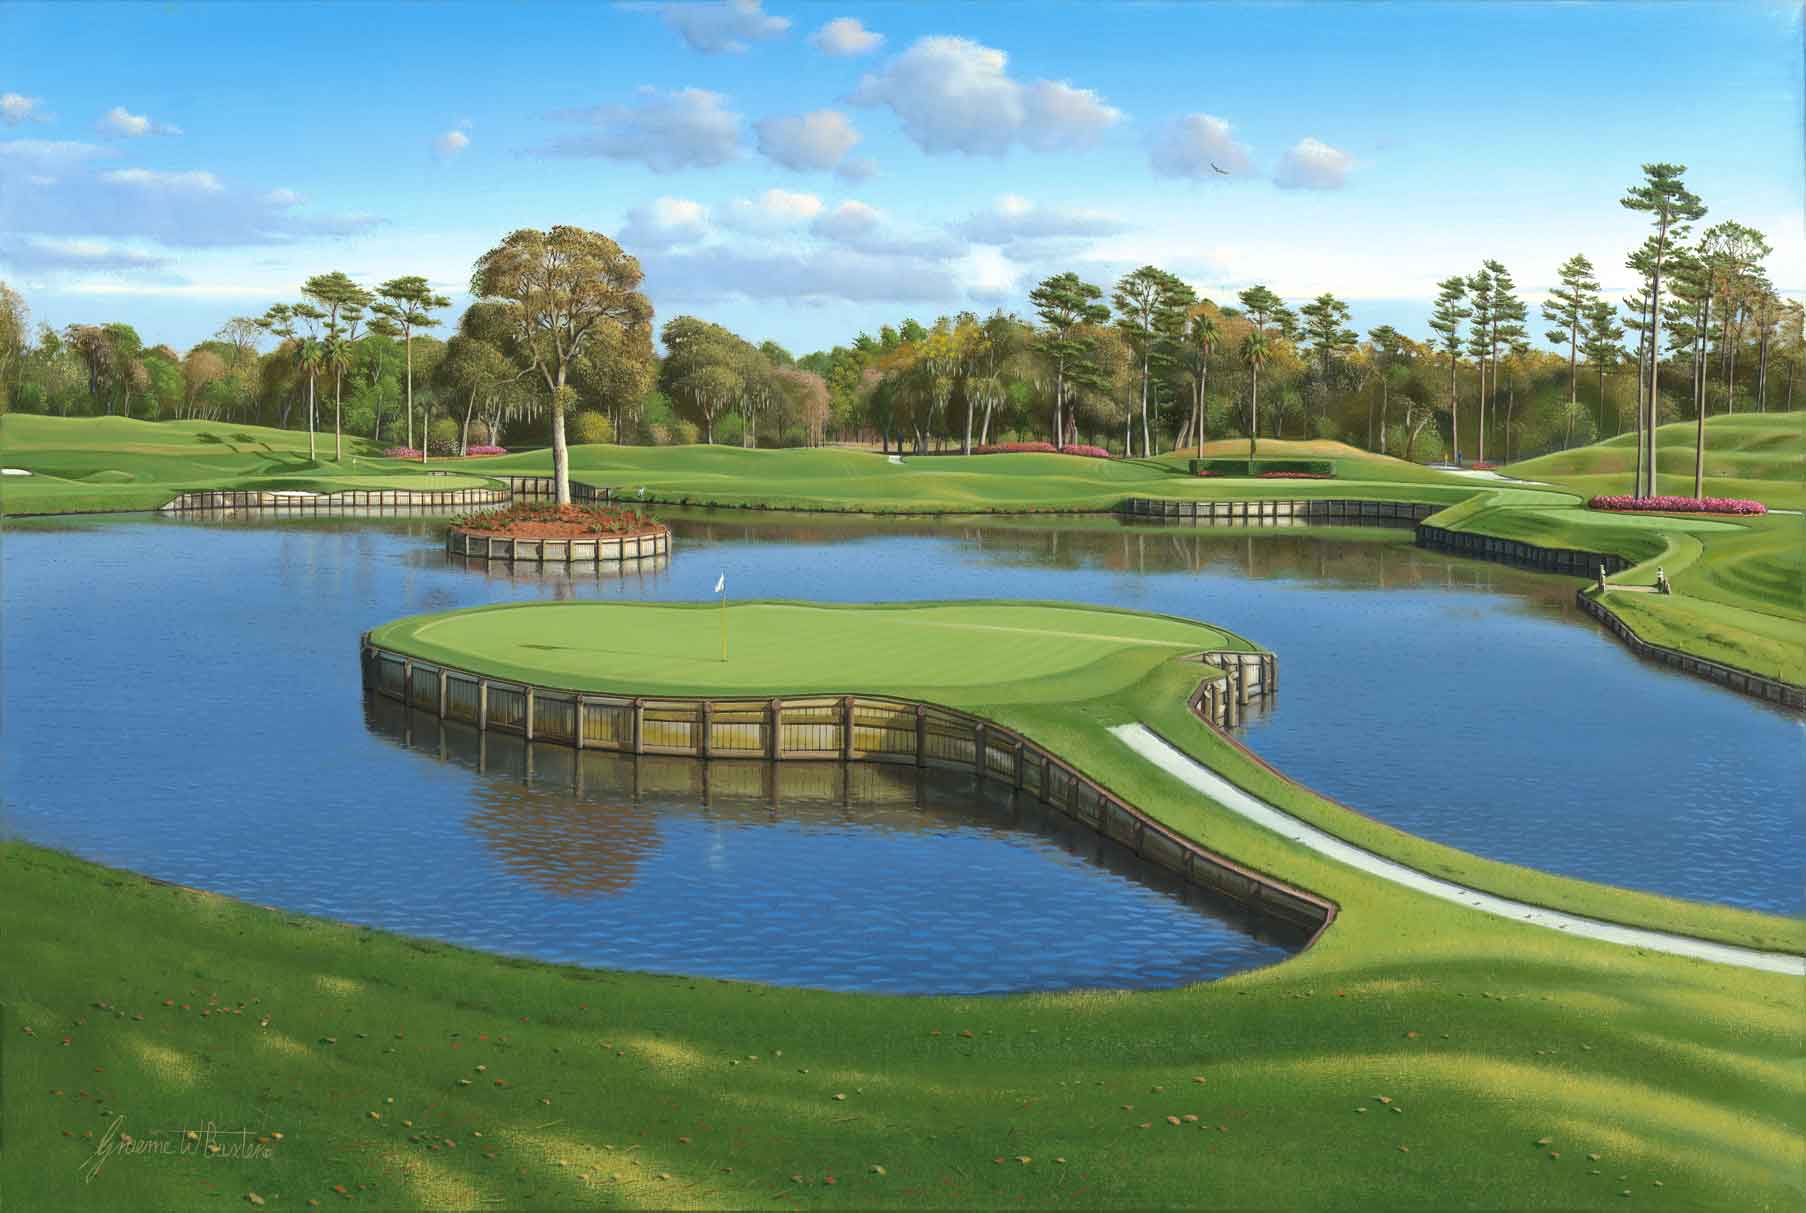 Golf Scenes Computer Wallpaper